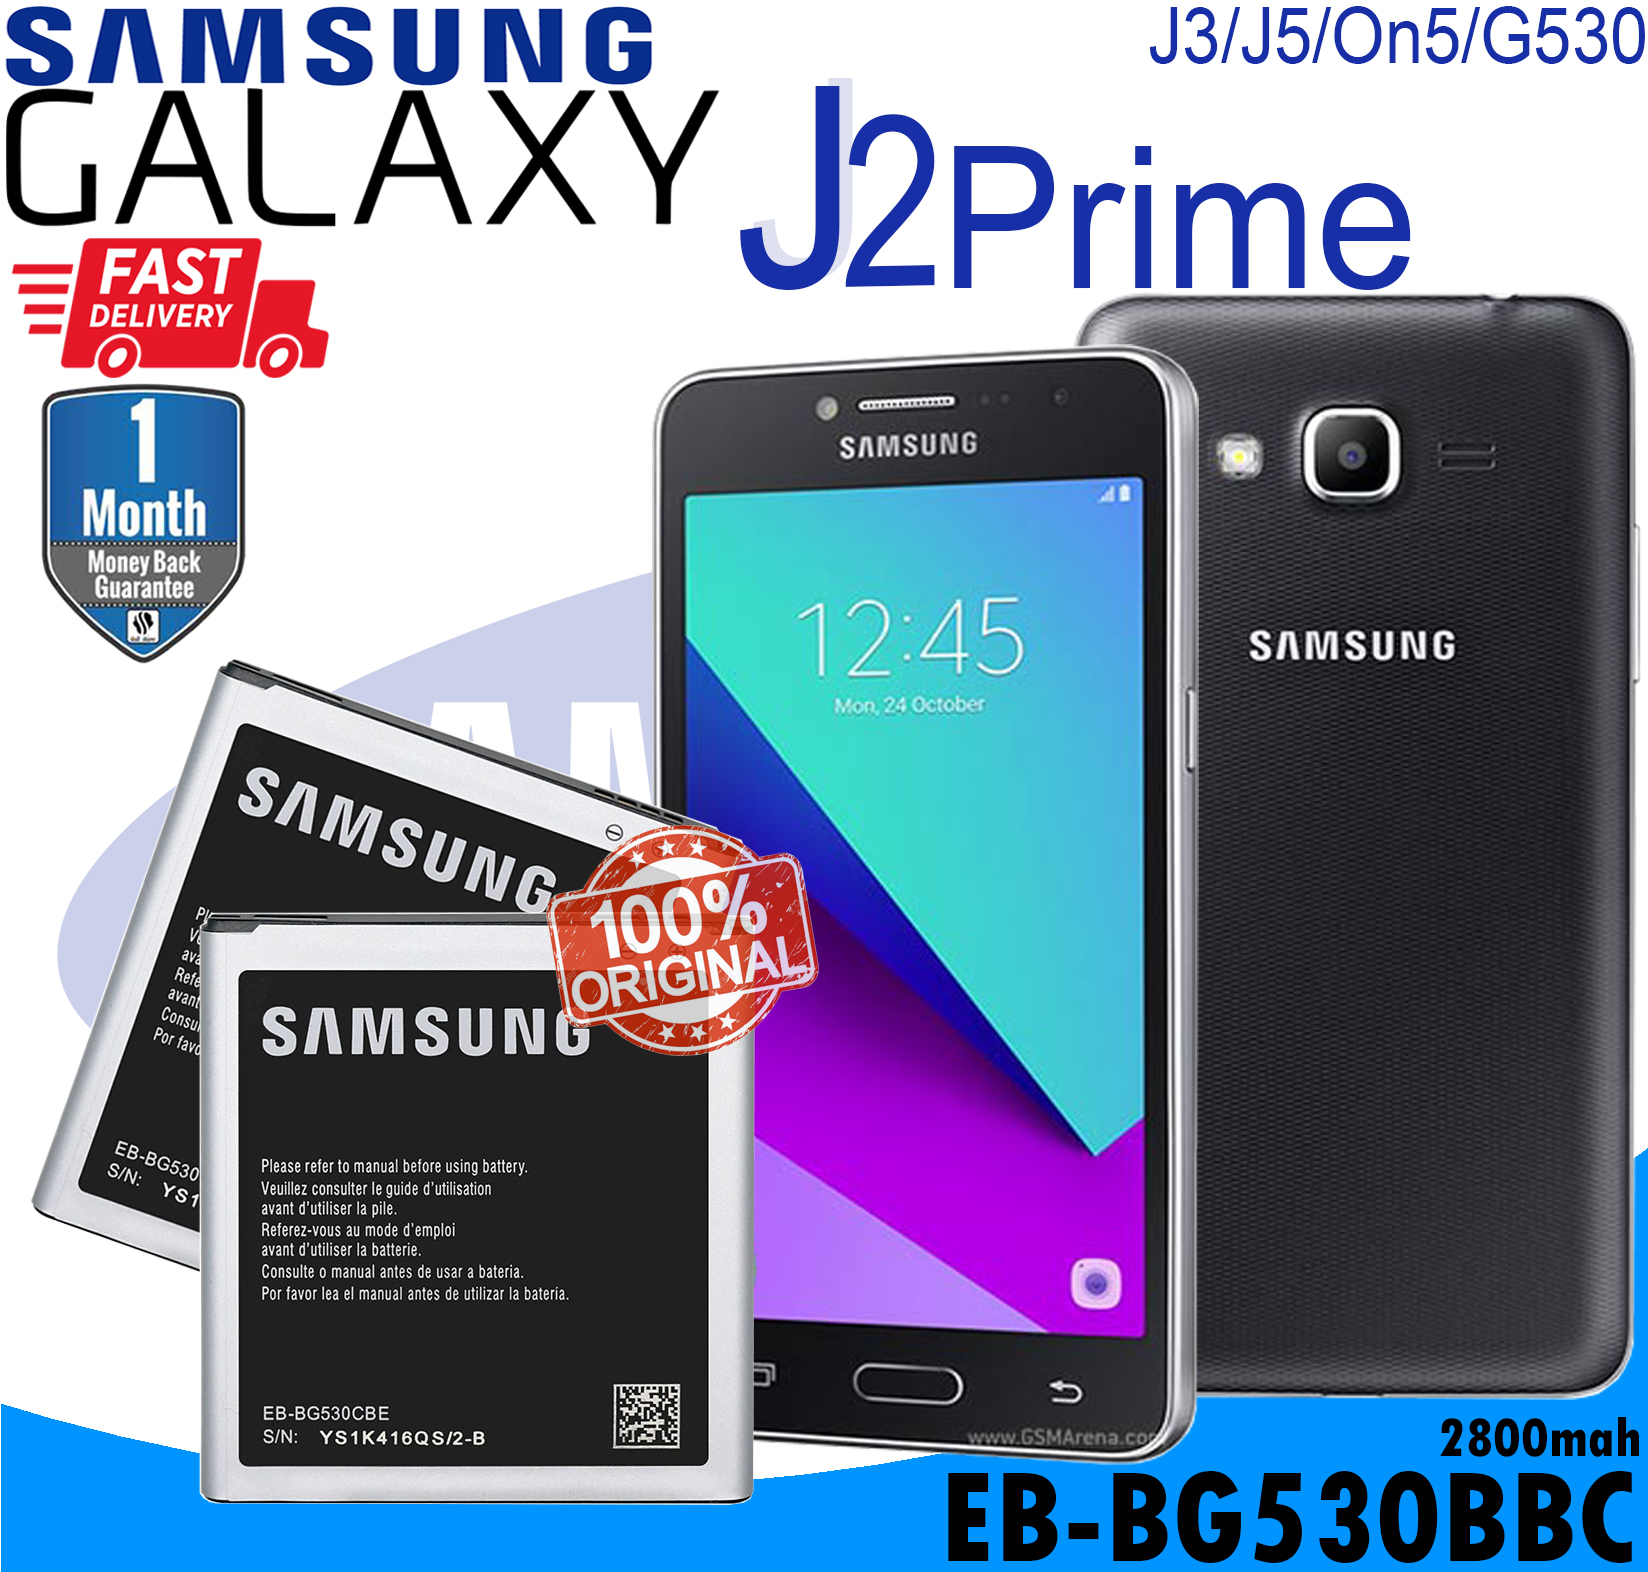 Samsung Galaxy J2 Prime J3 16 Grand Prime J5 15 G530h Sm G5306w Sm G5308w Sm G5309w G530 2600mah Eb Bg530cbe 100 Original Genuine Manufacturer Lazada Ph